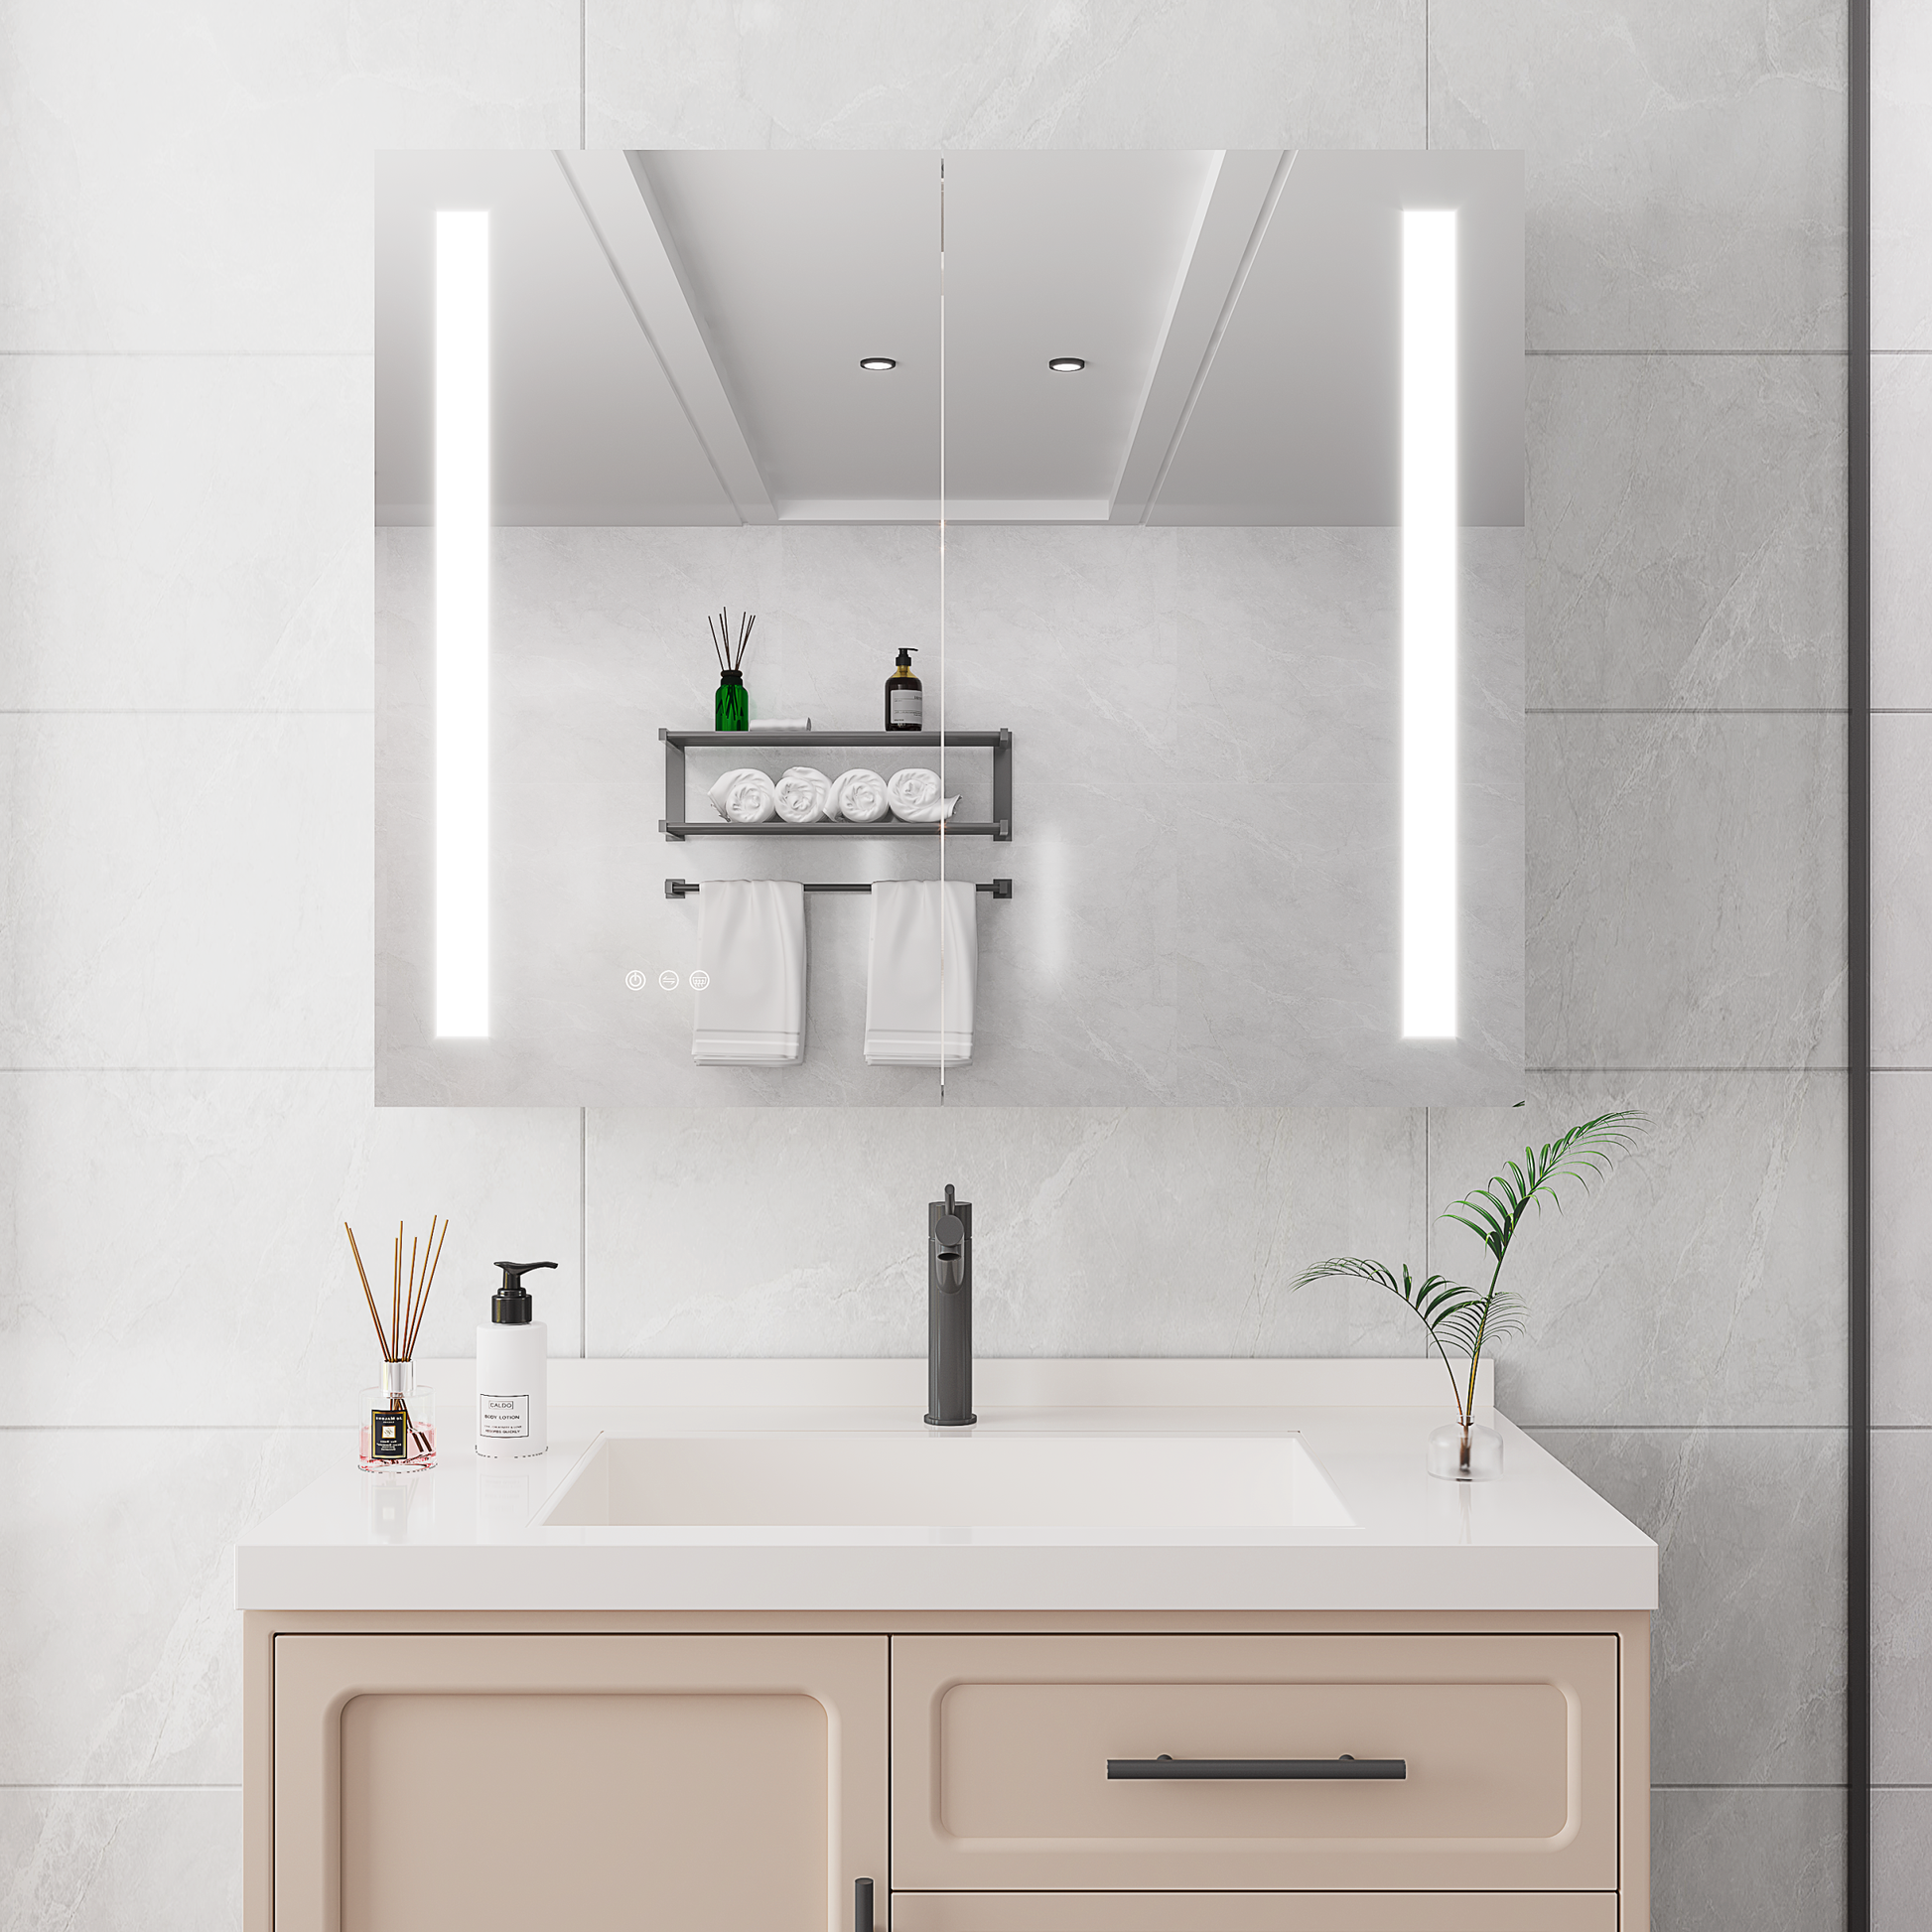 36 x 30 inch Medicine Cabinet with LED Vanity Mirror mirror included-bathroom-powder